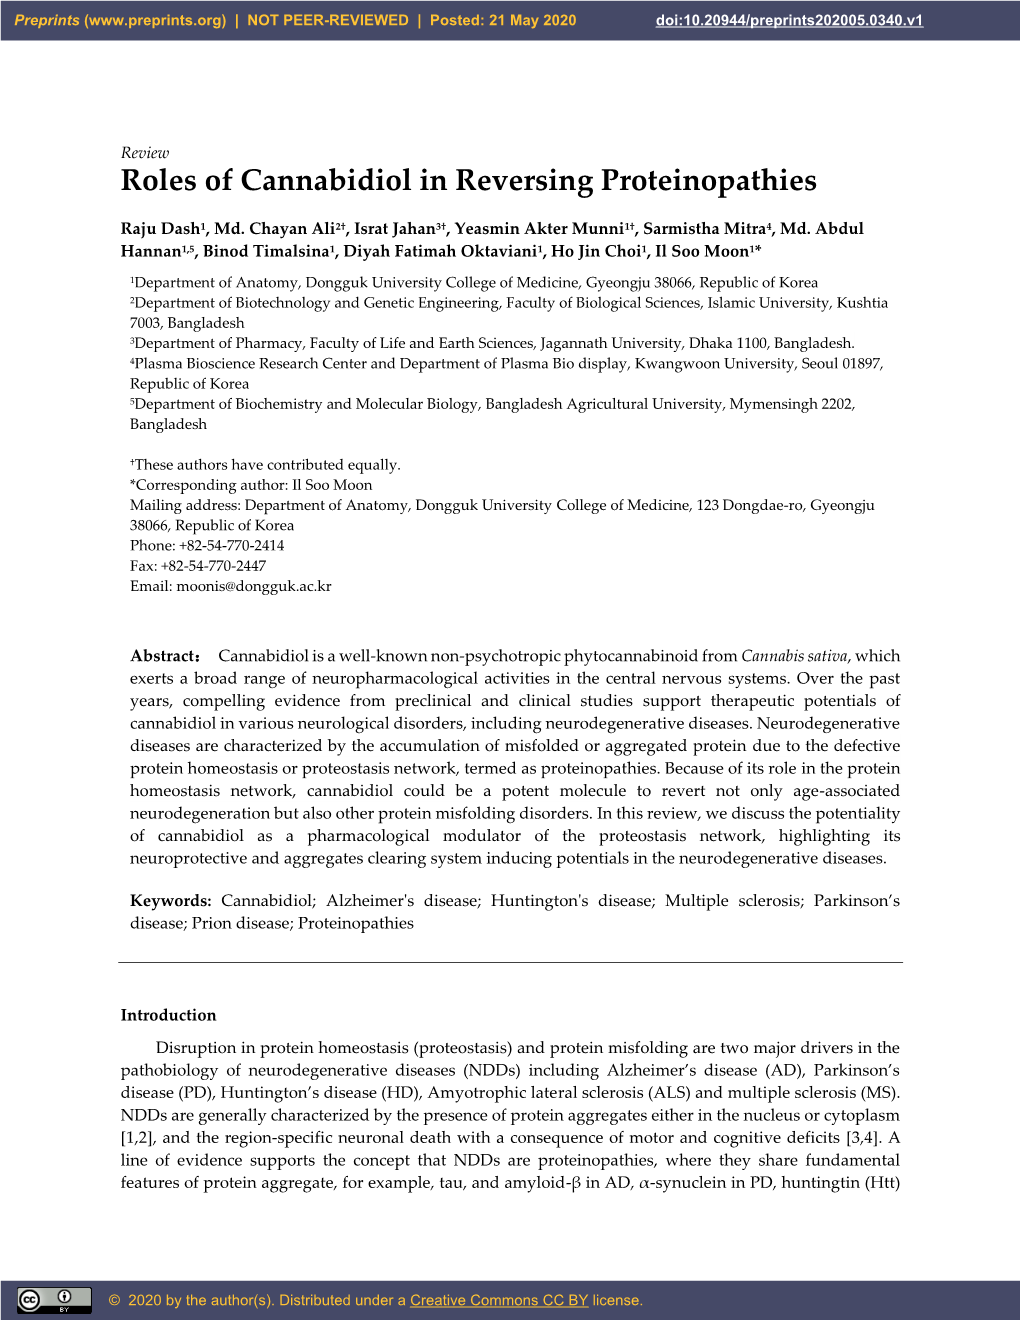 Roles of Cannabidiol in Reversing Proteinopathies